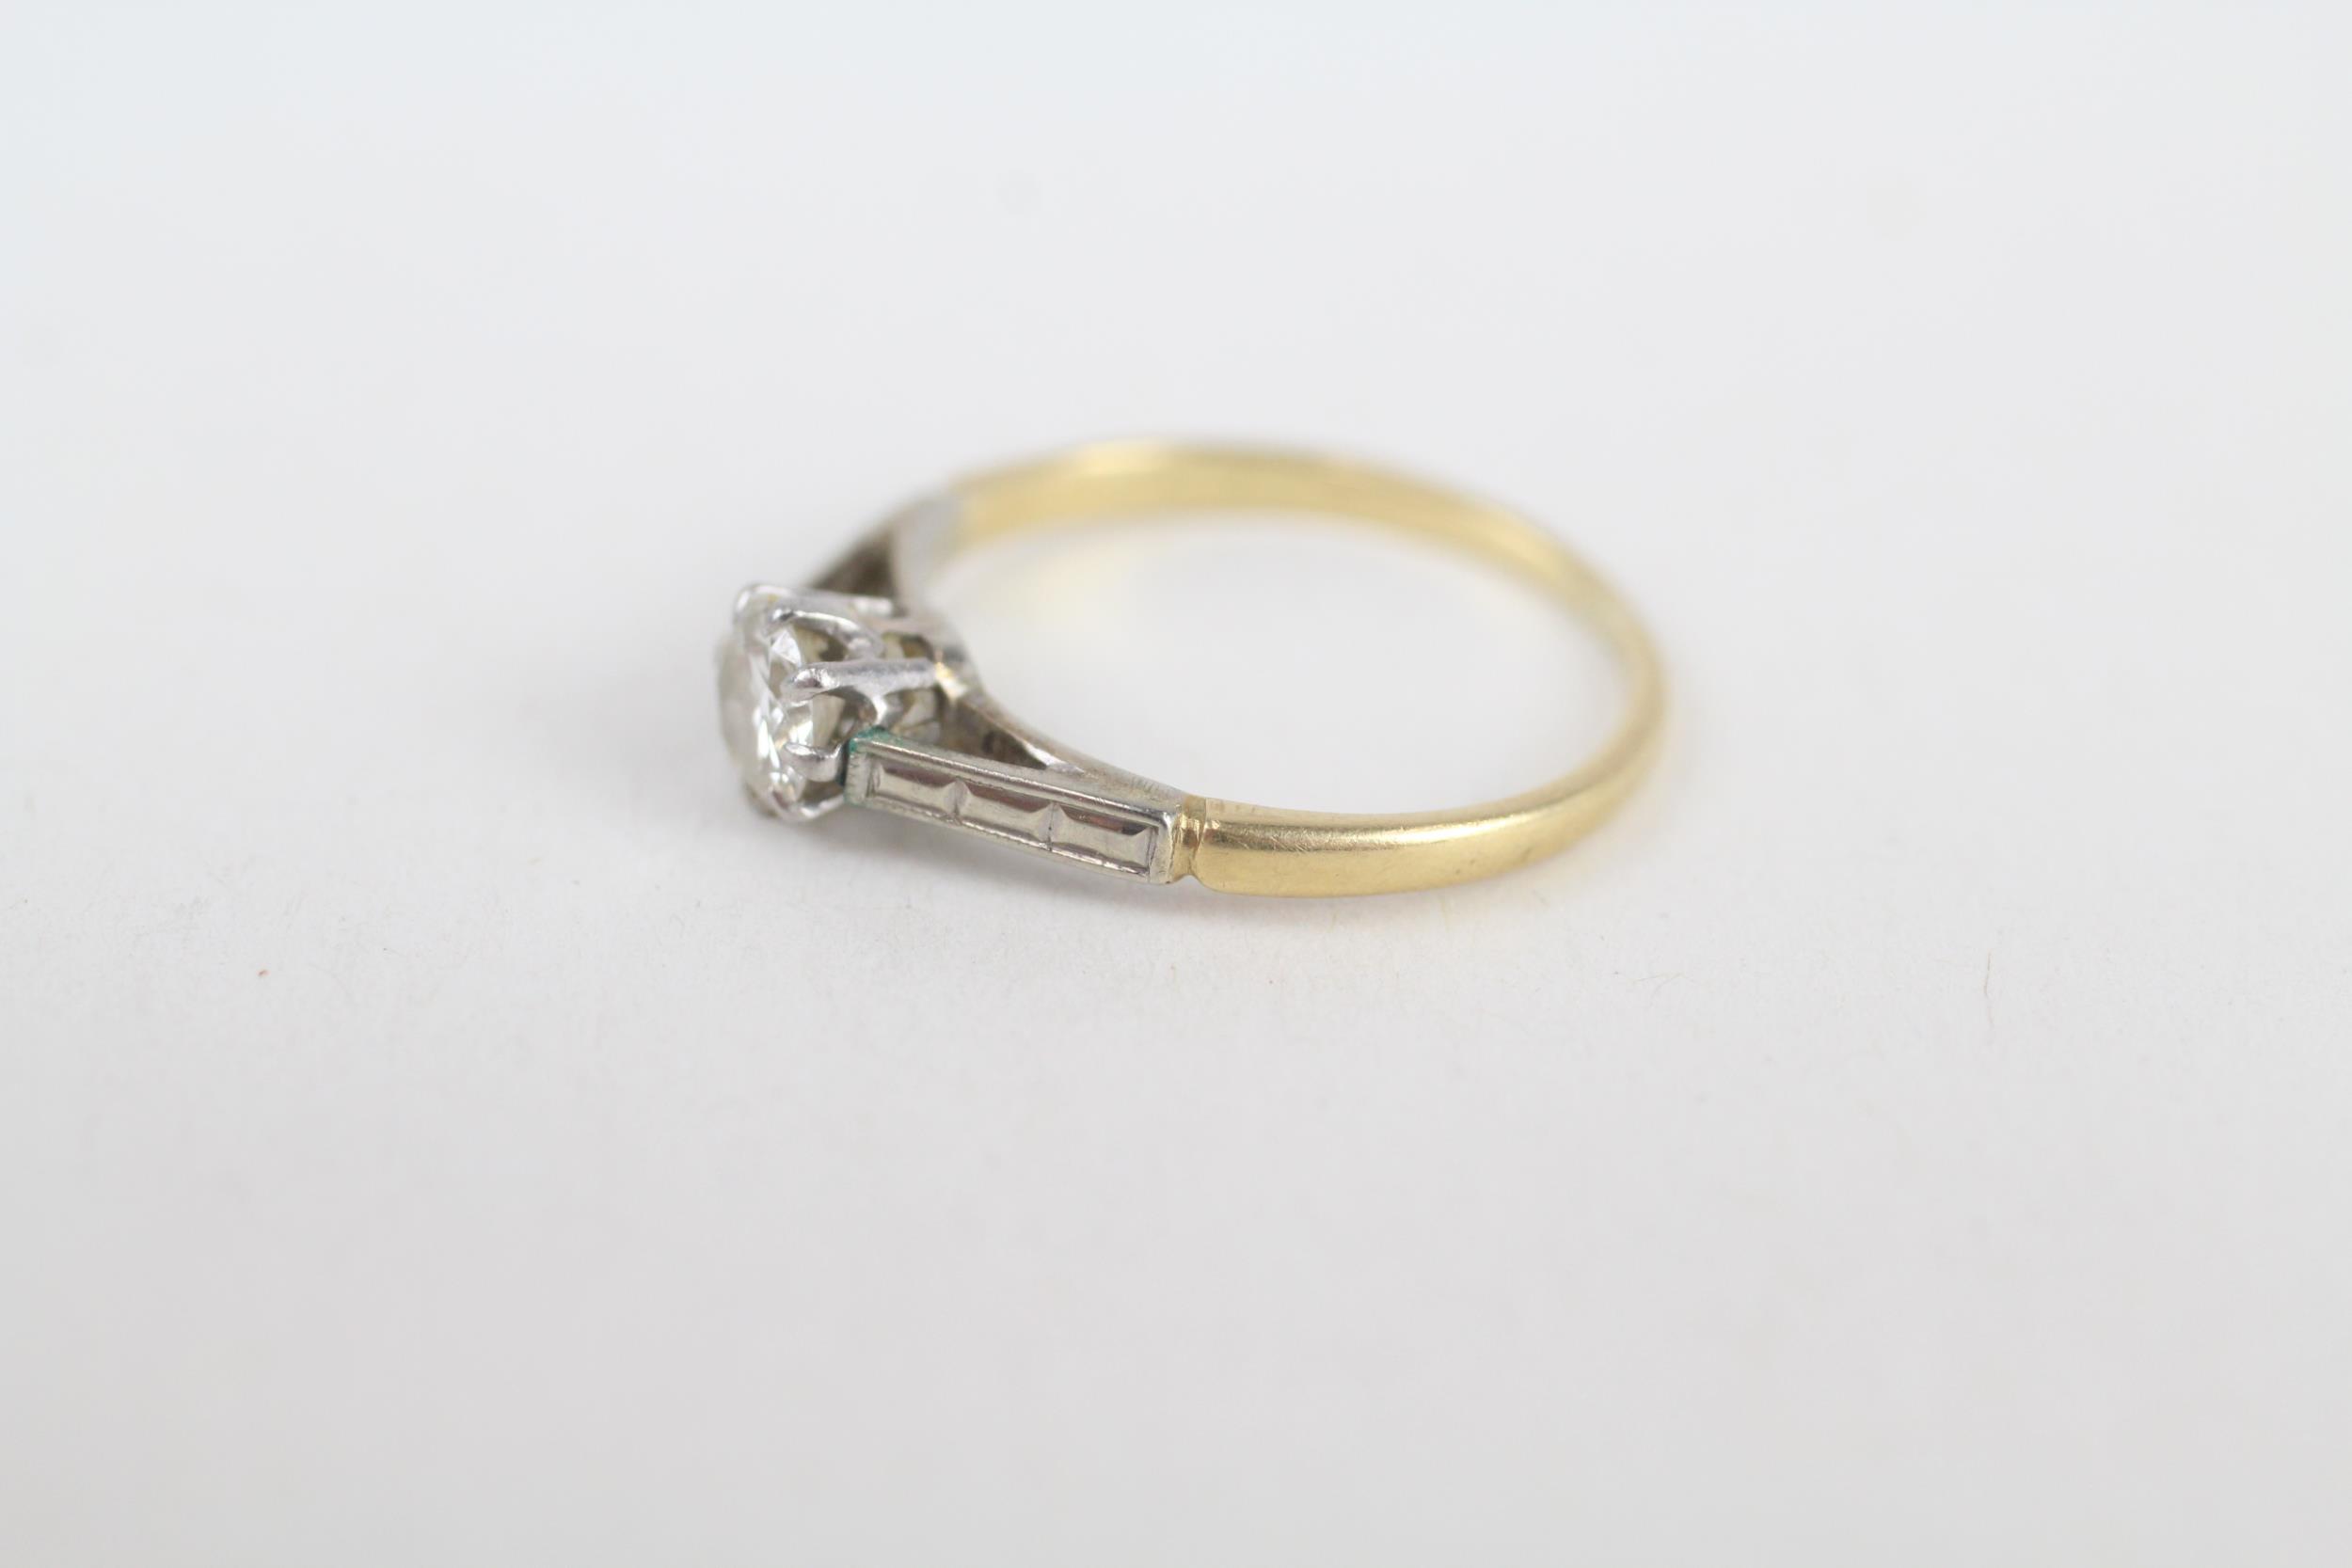 18ct gold round brilliant cut diamond single stone ring Size H 1/2 1.5 g - Image 4 of 5